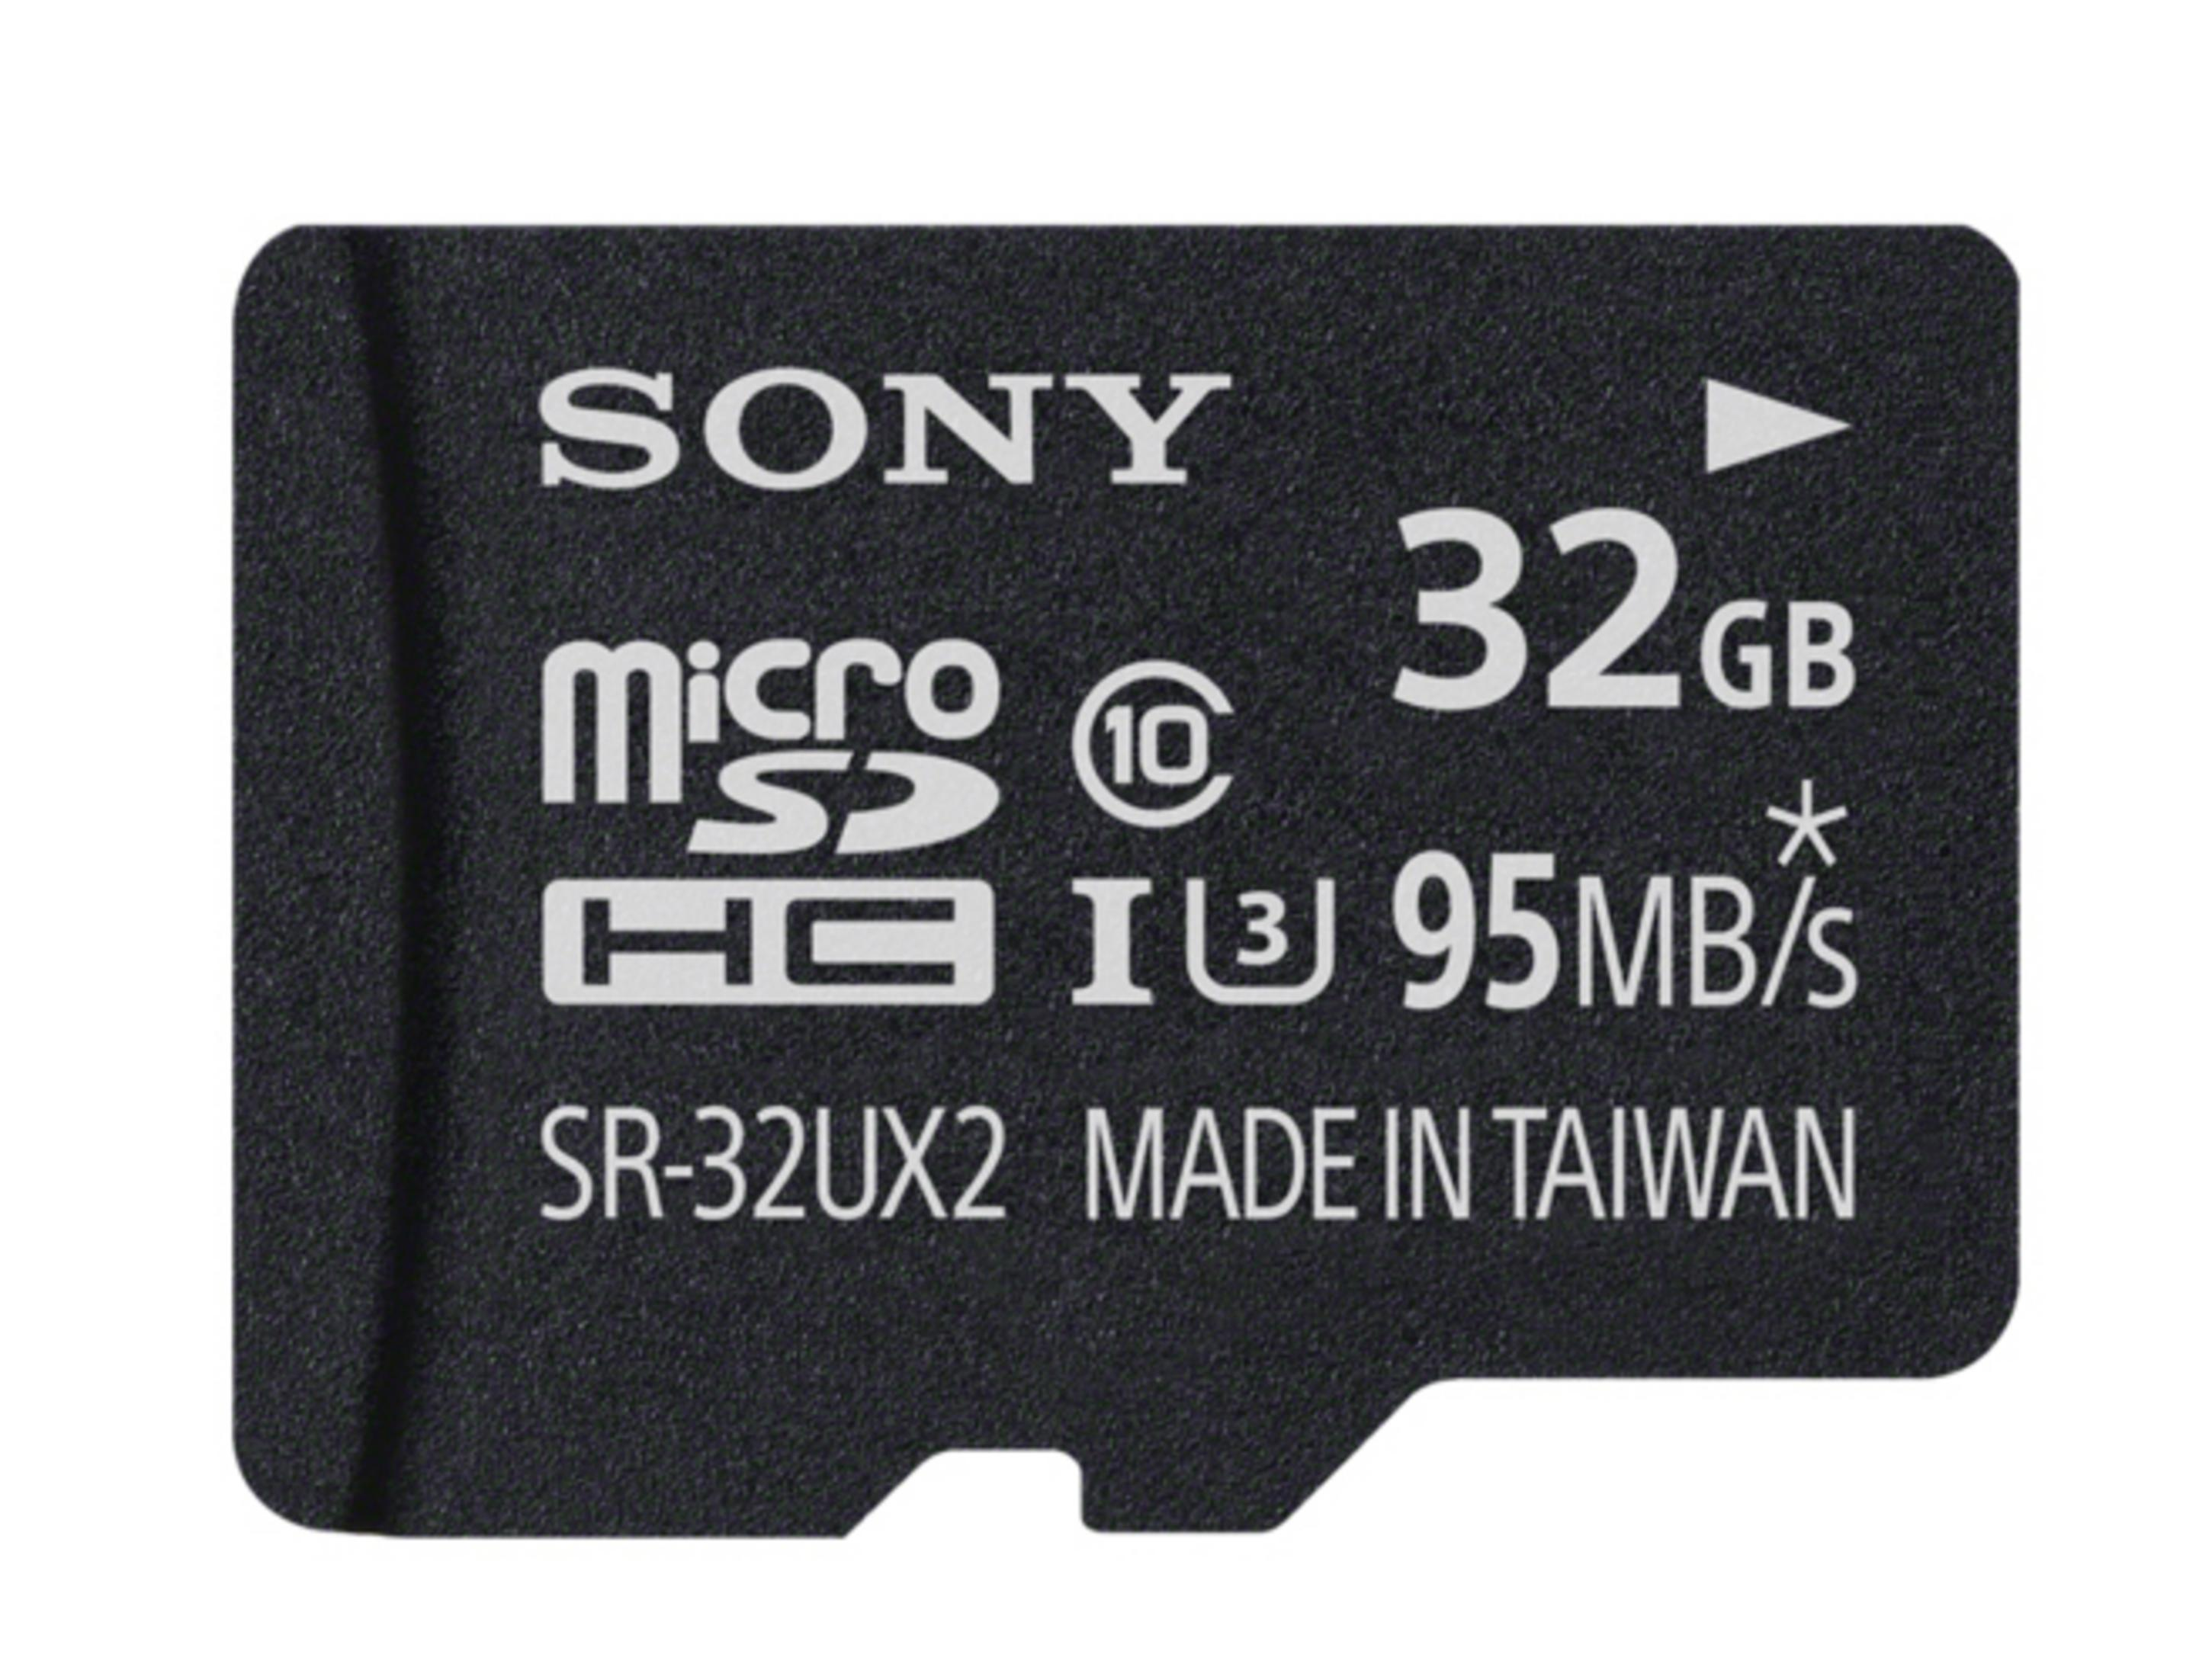 SONY SR32UXA, Micro-SDHC MB/s 95 GB, Speicherkarte, 32